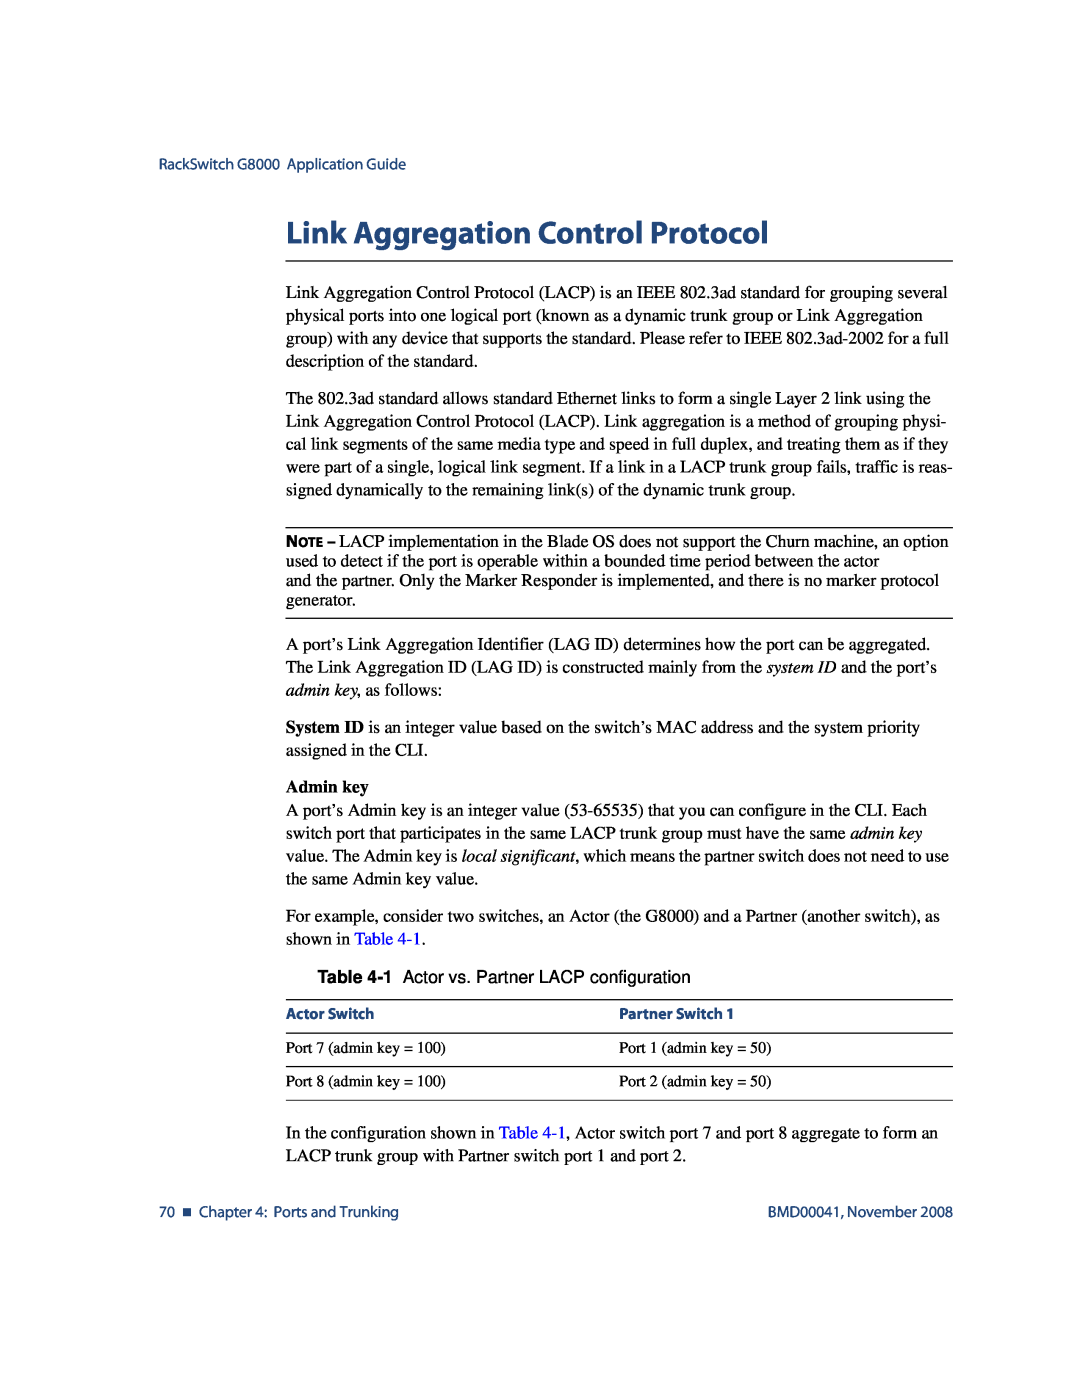 Blade ICE G8000 manual Link Aggregation Control Protocol, Admin key 